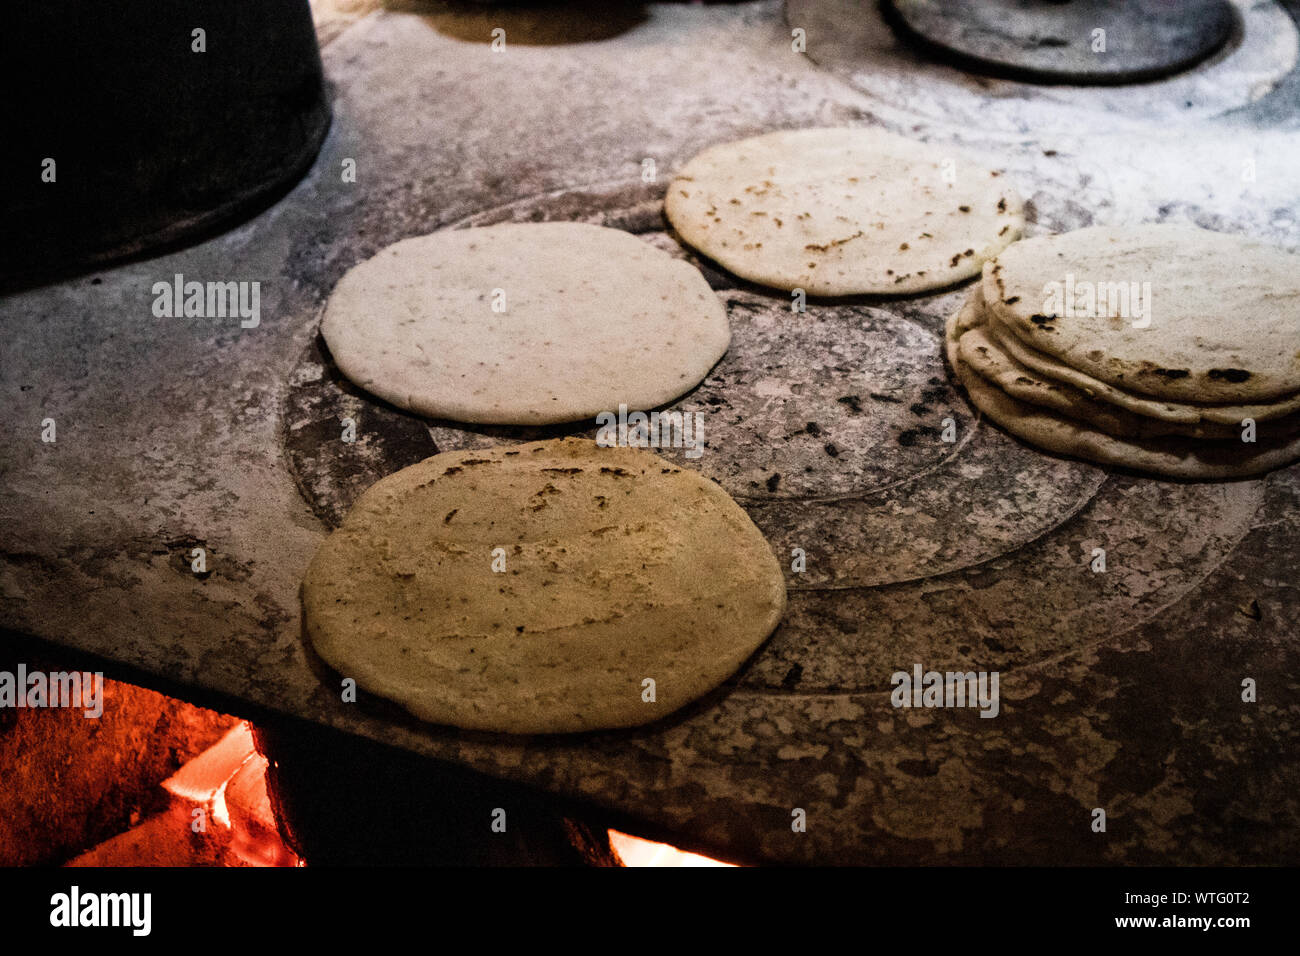 https://c8.alamy.com/comp/WTG0T2/handmade-corn-tortillas-in-guatemala-WTG0T2.jpg